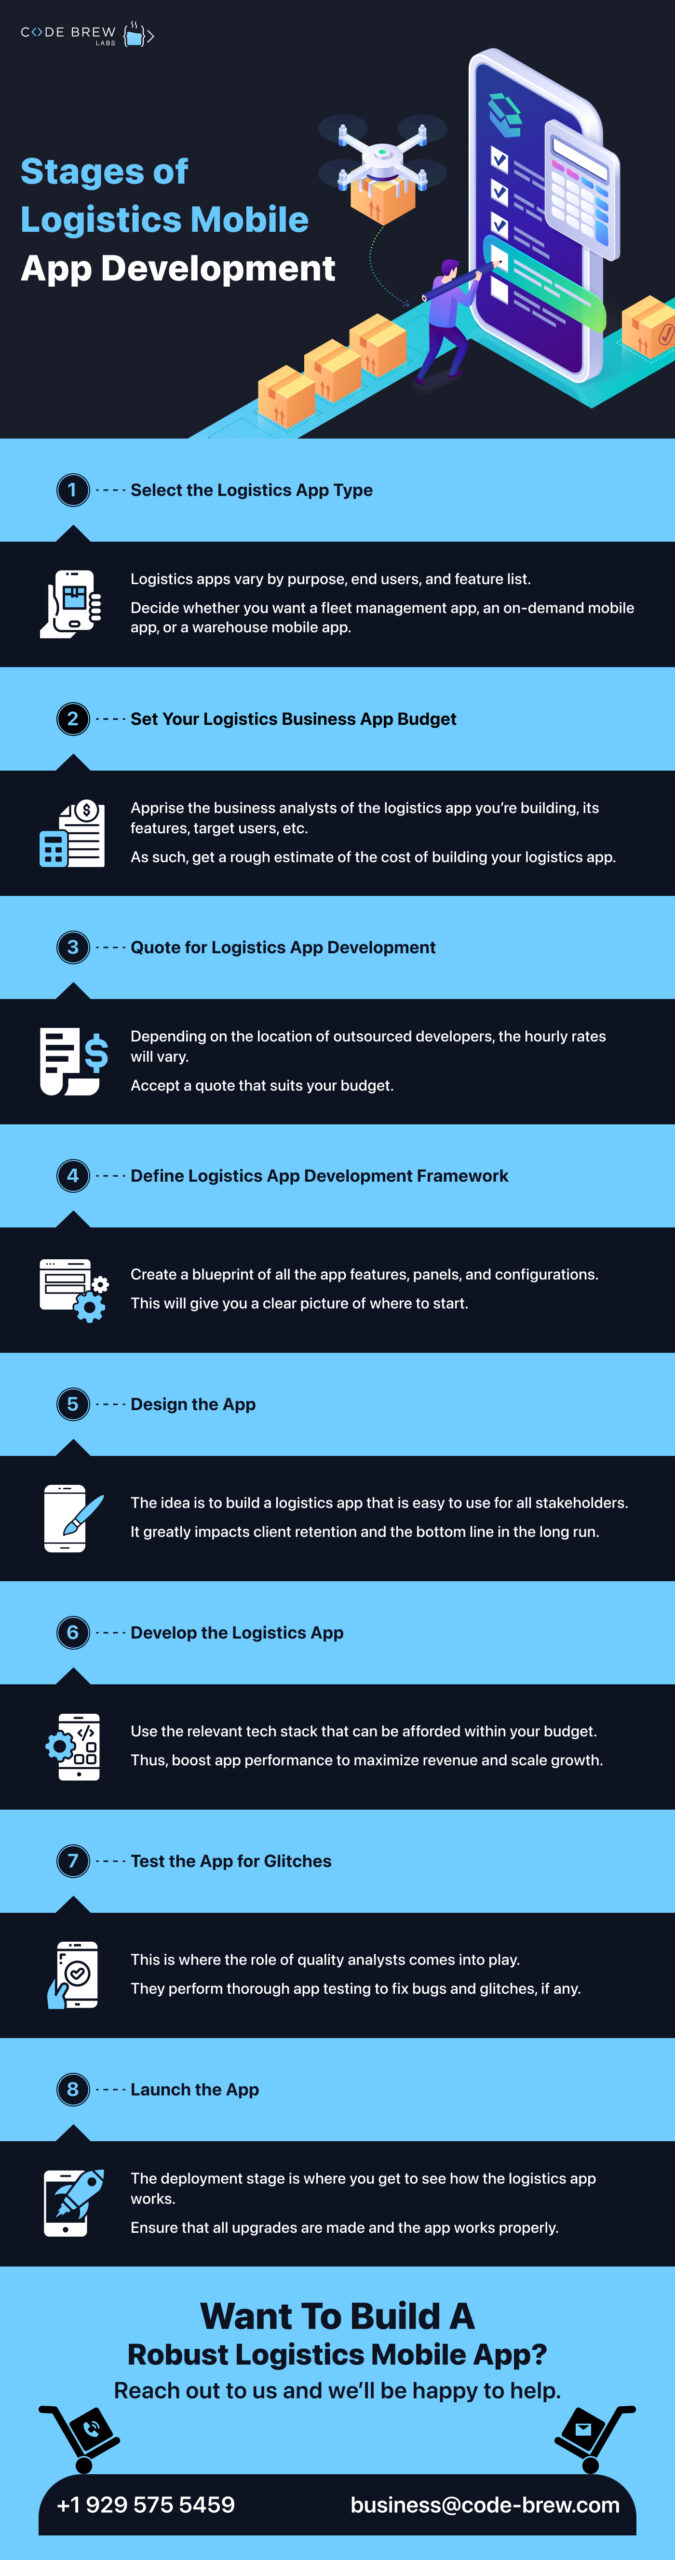 Stages of Logistics Mobile App Development